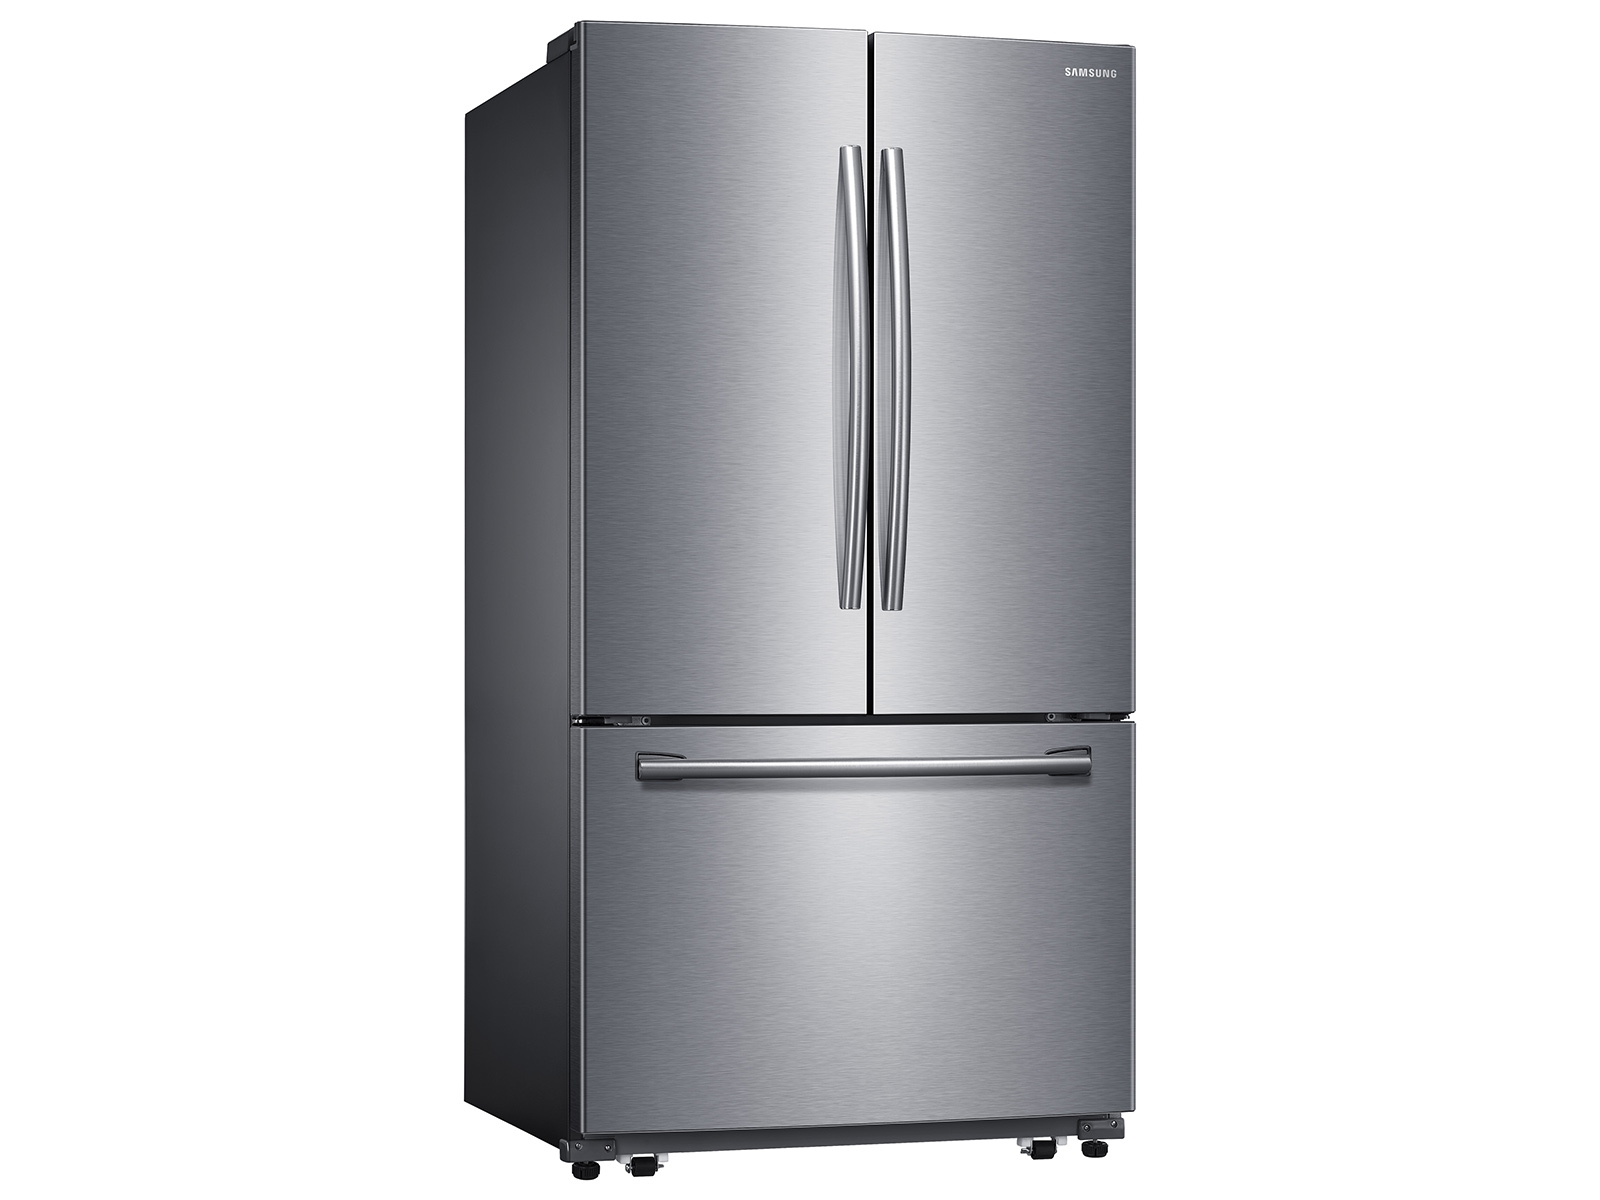 compact dishwasher - appliances - by owner - sale - craigslist